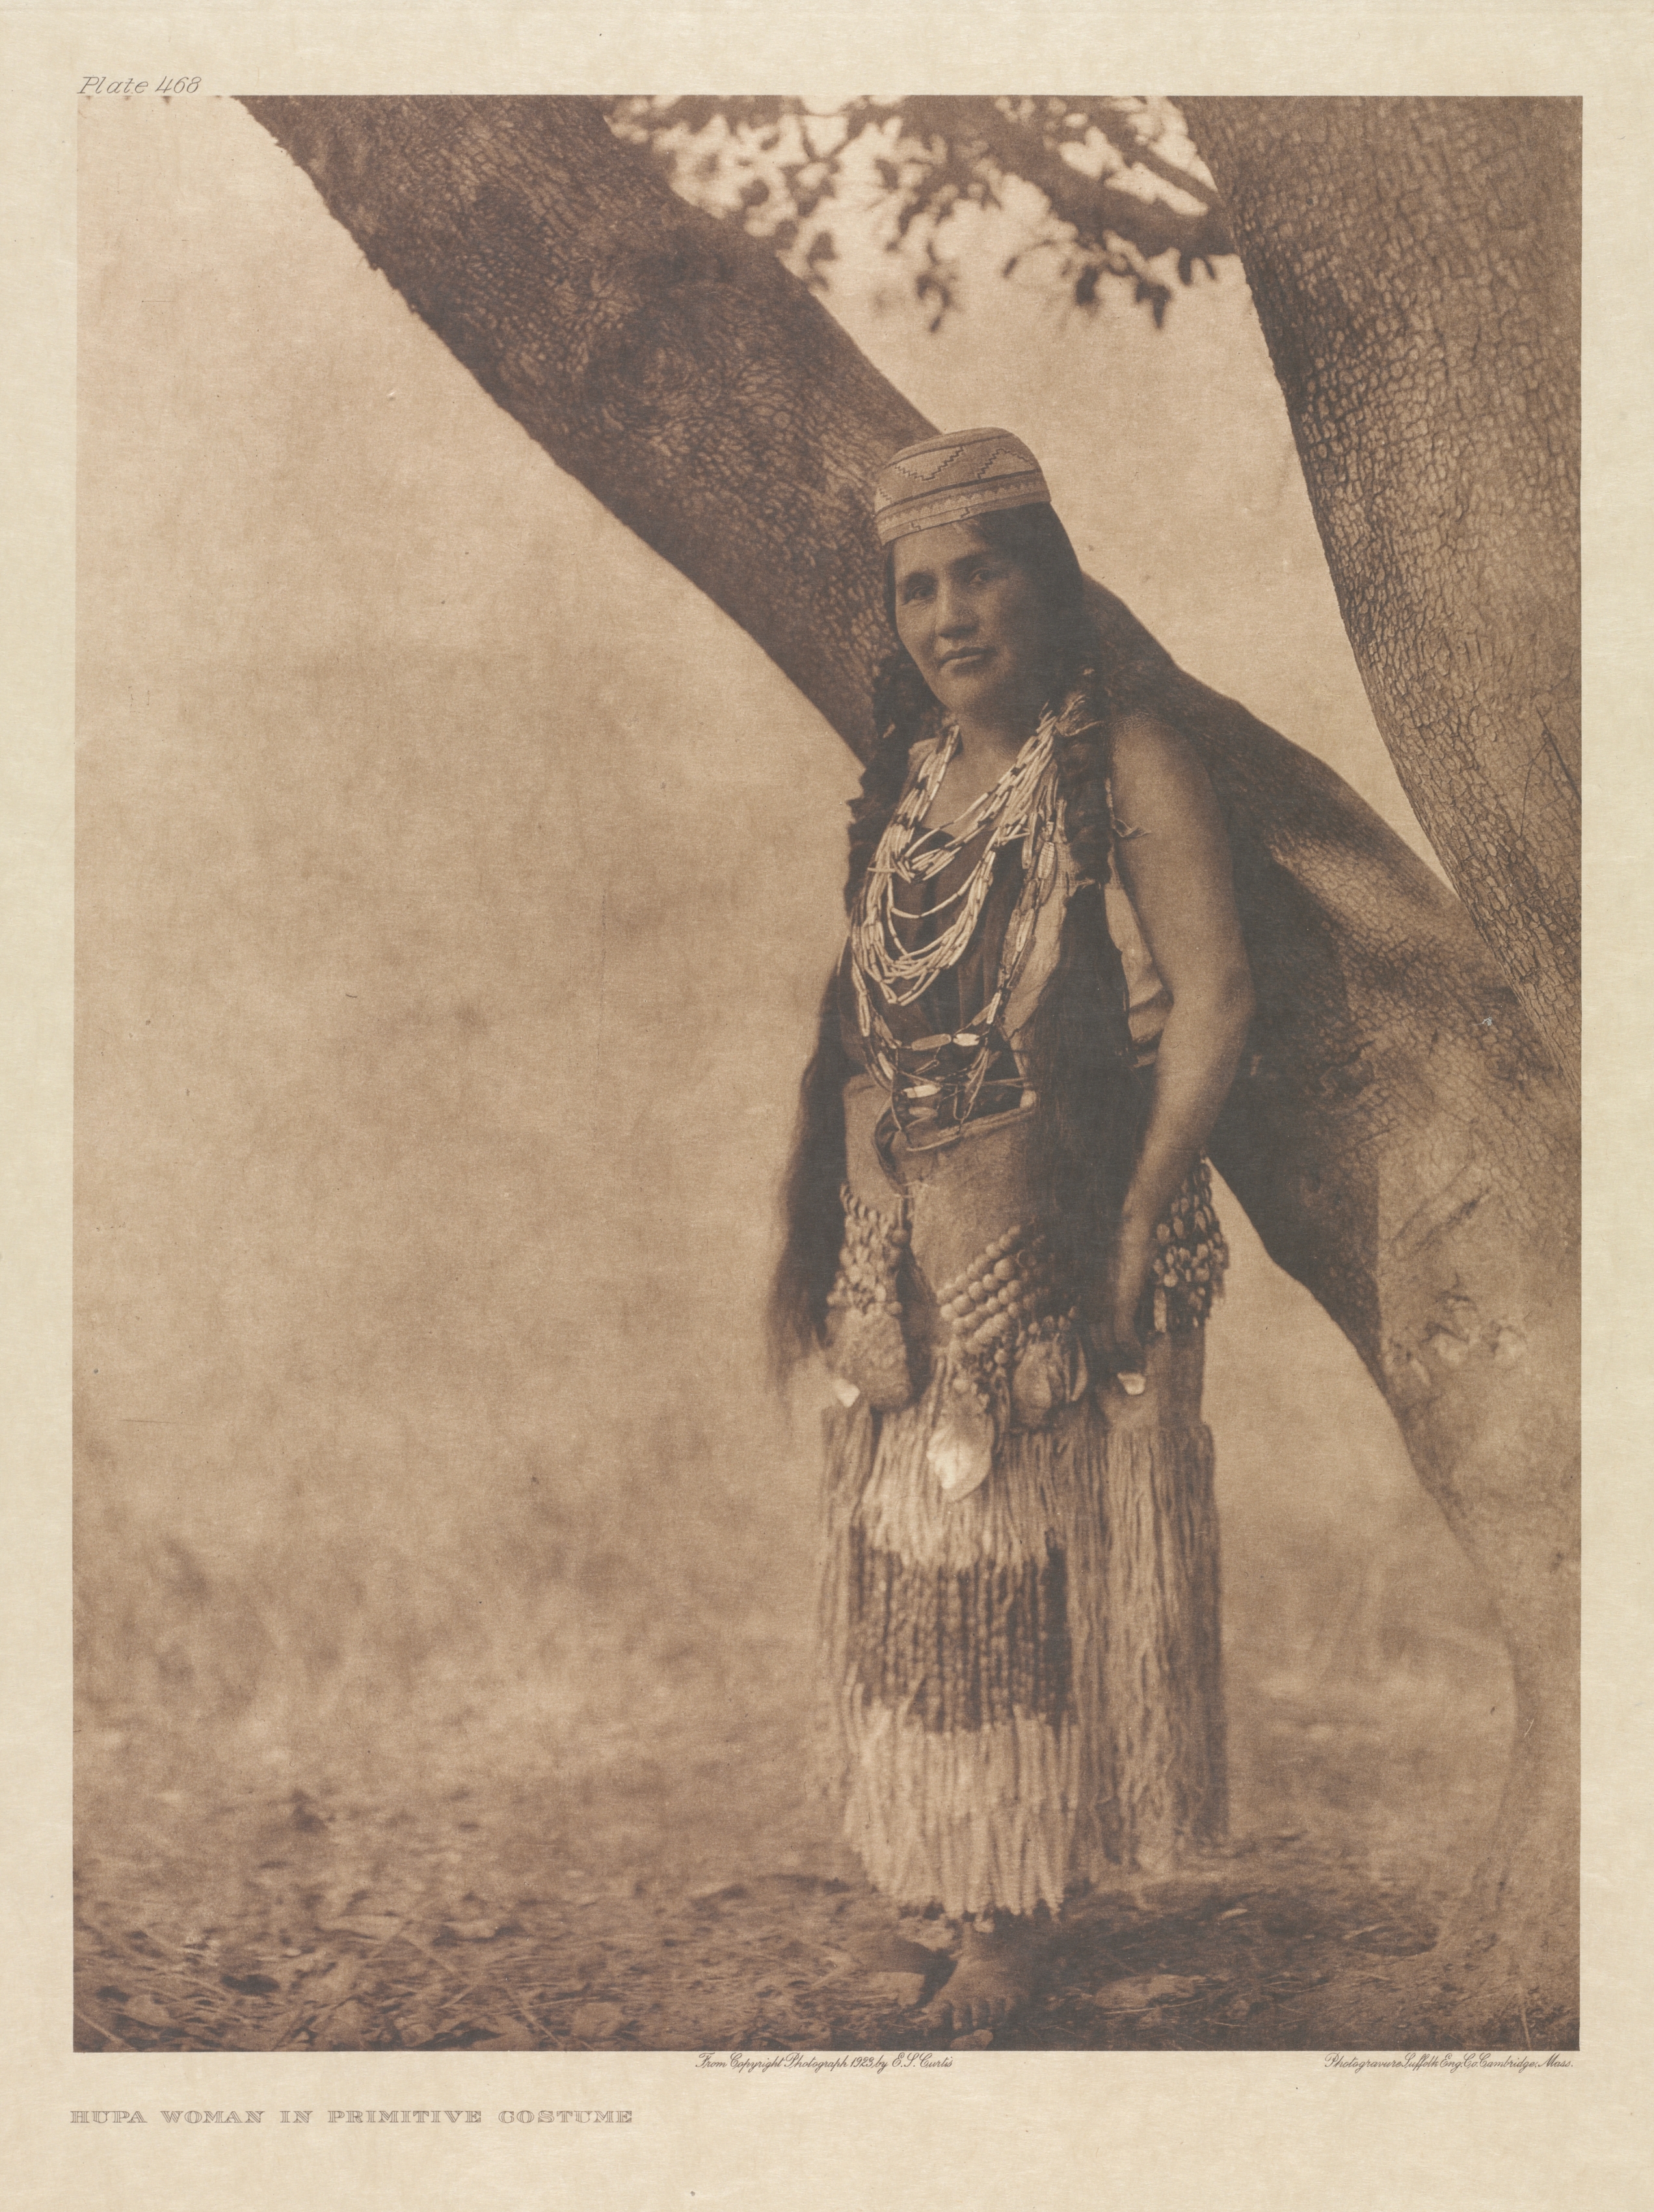 Portfolio XIII, Plate 468: Hupa Woman in Primitive Costume